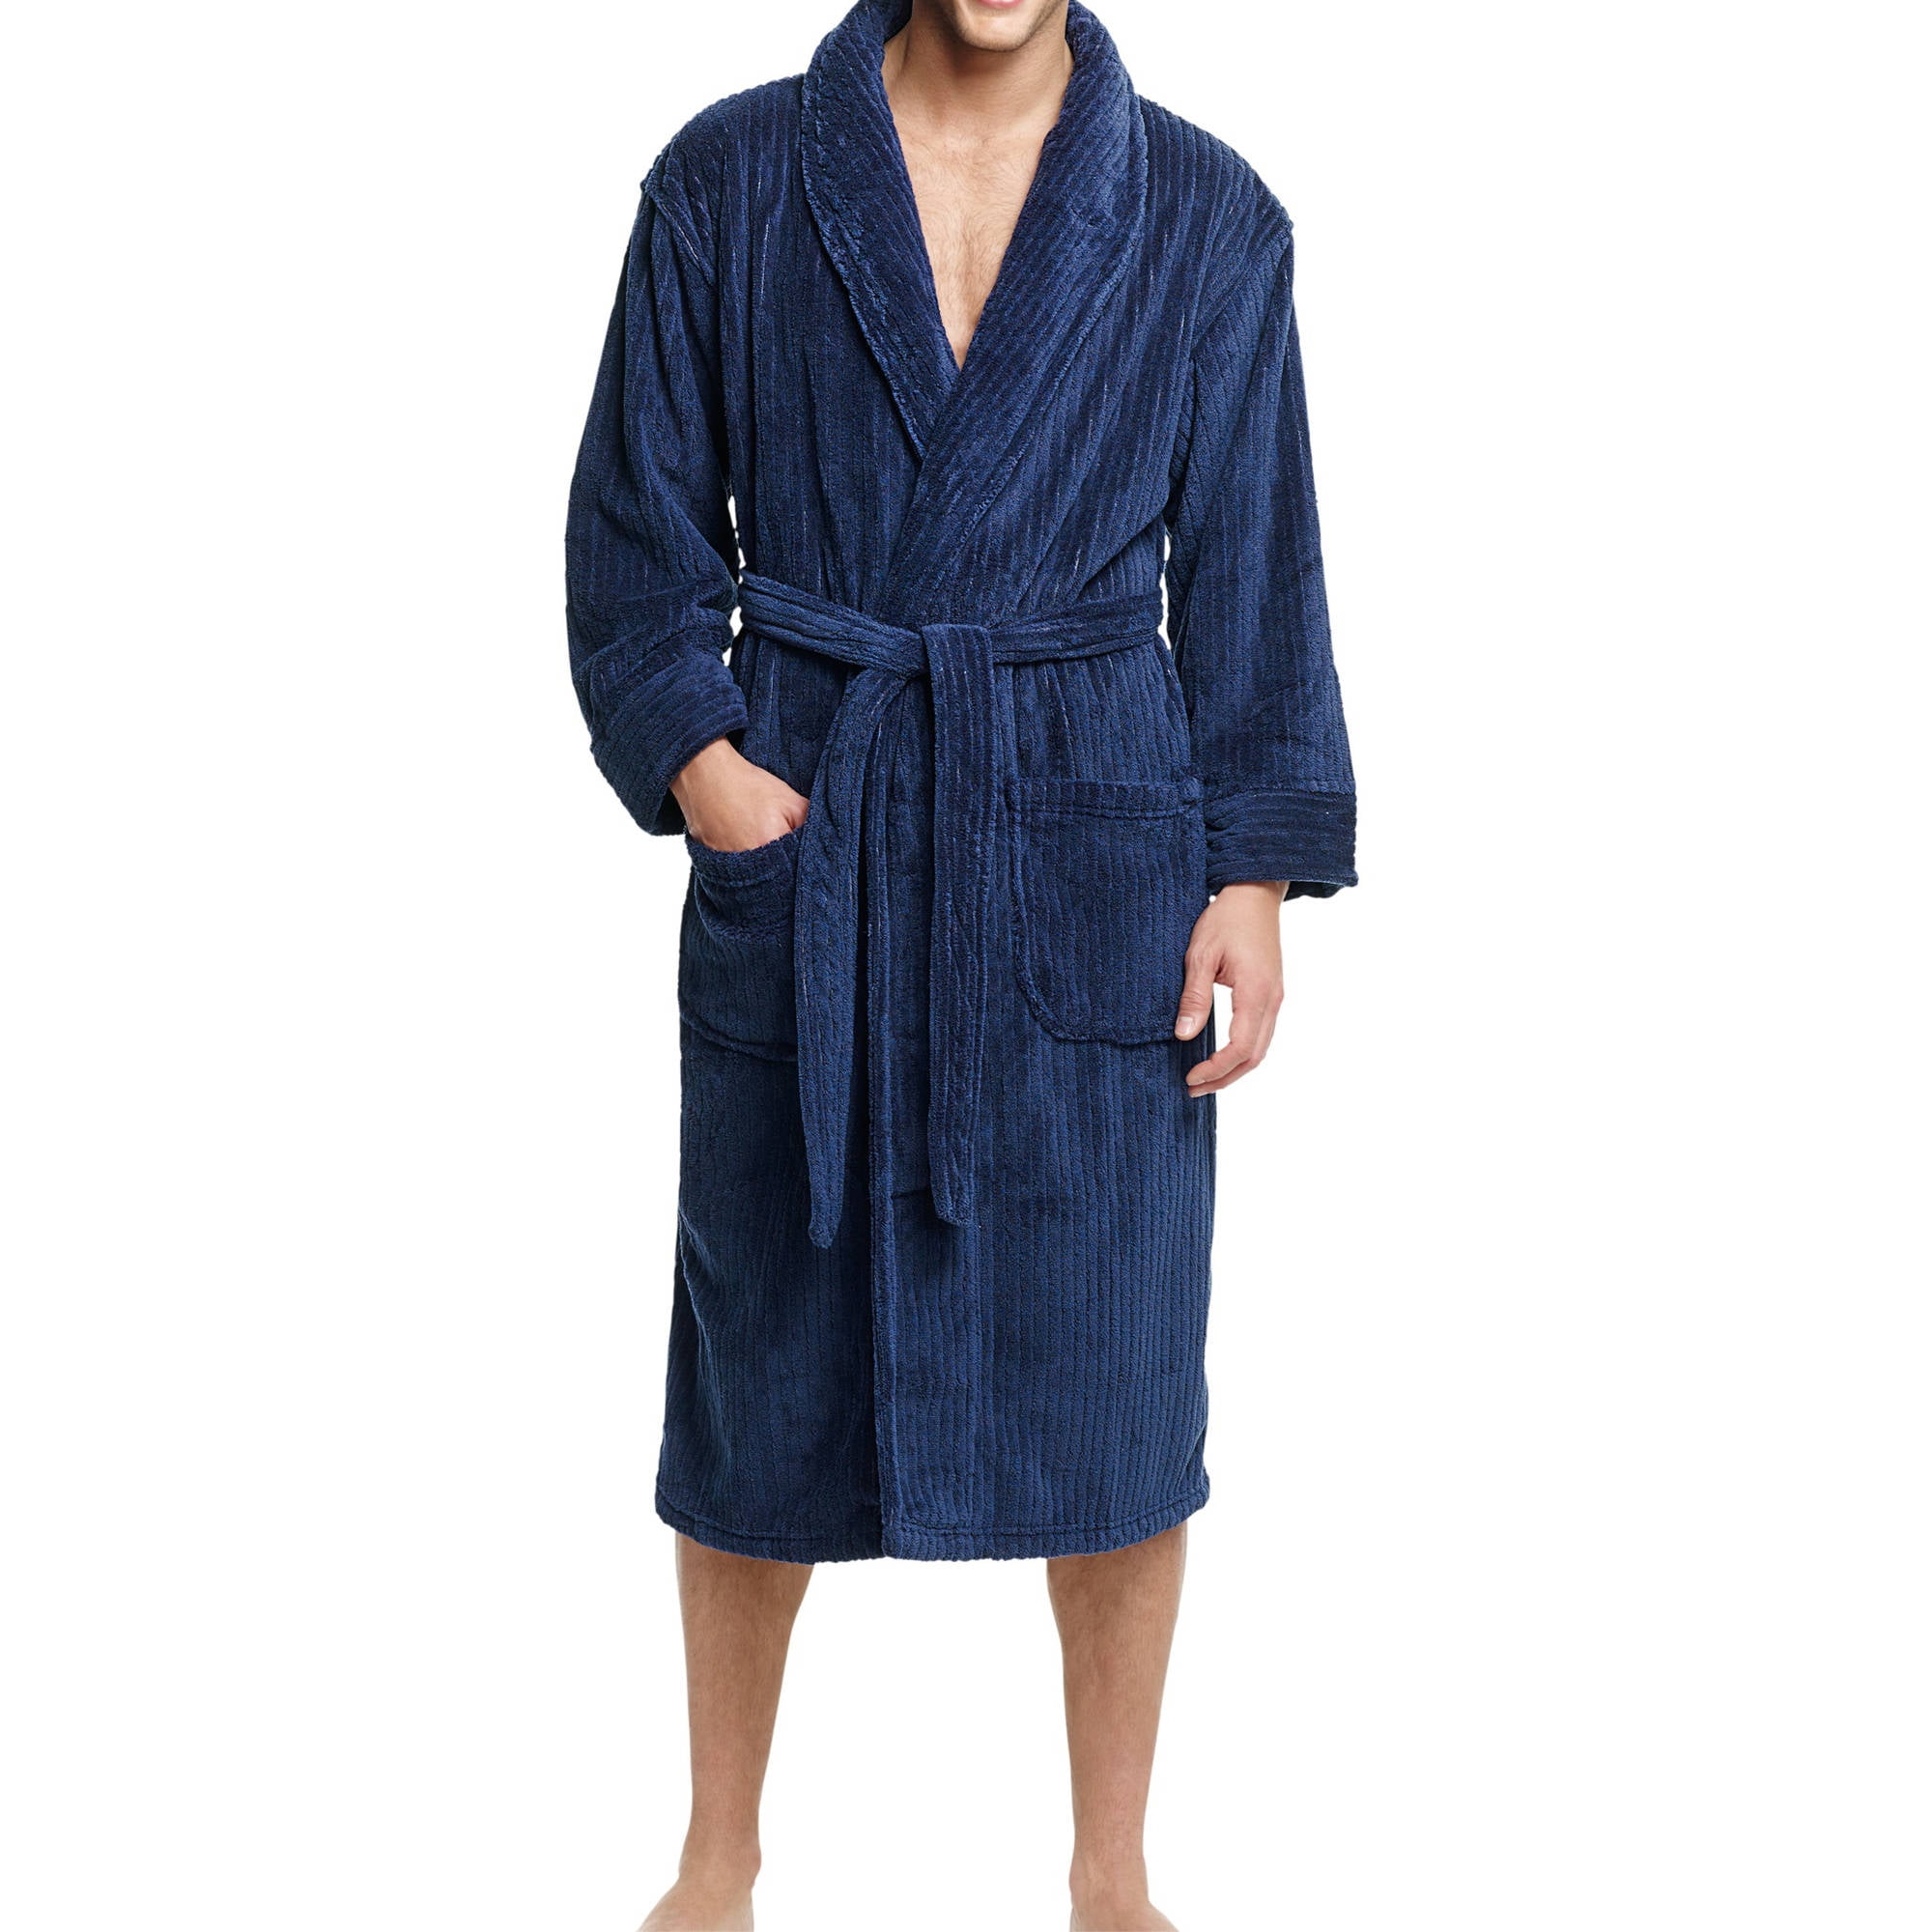 Investigation pump miser Hanes Striped Pockets Polyester Robe (Men's) 1 Pack - Walmart.com